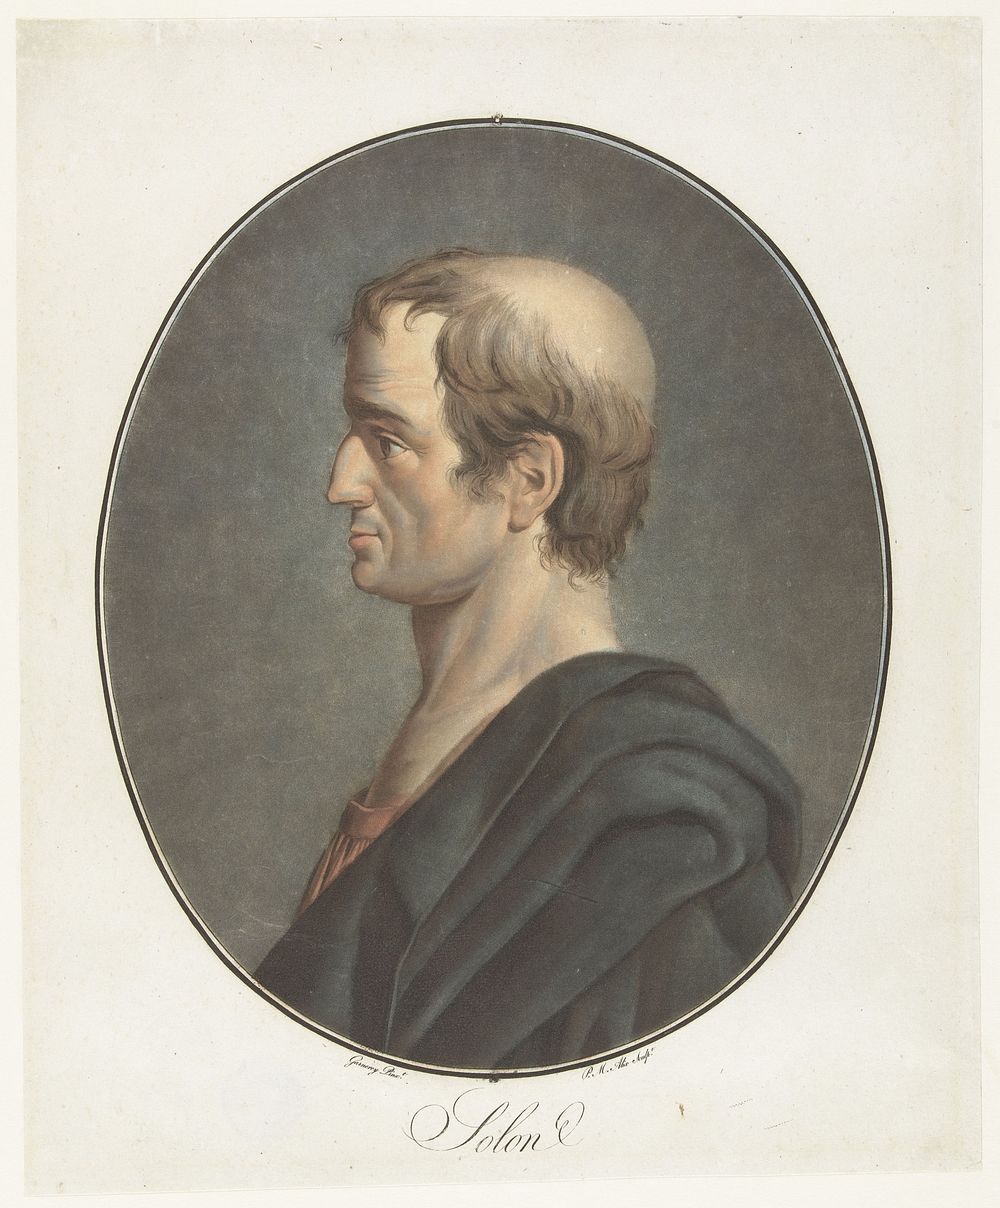 Portret van Solon (1793 - 1795) by Pierre Michel Alix and Jean François Garnerey